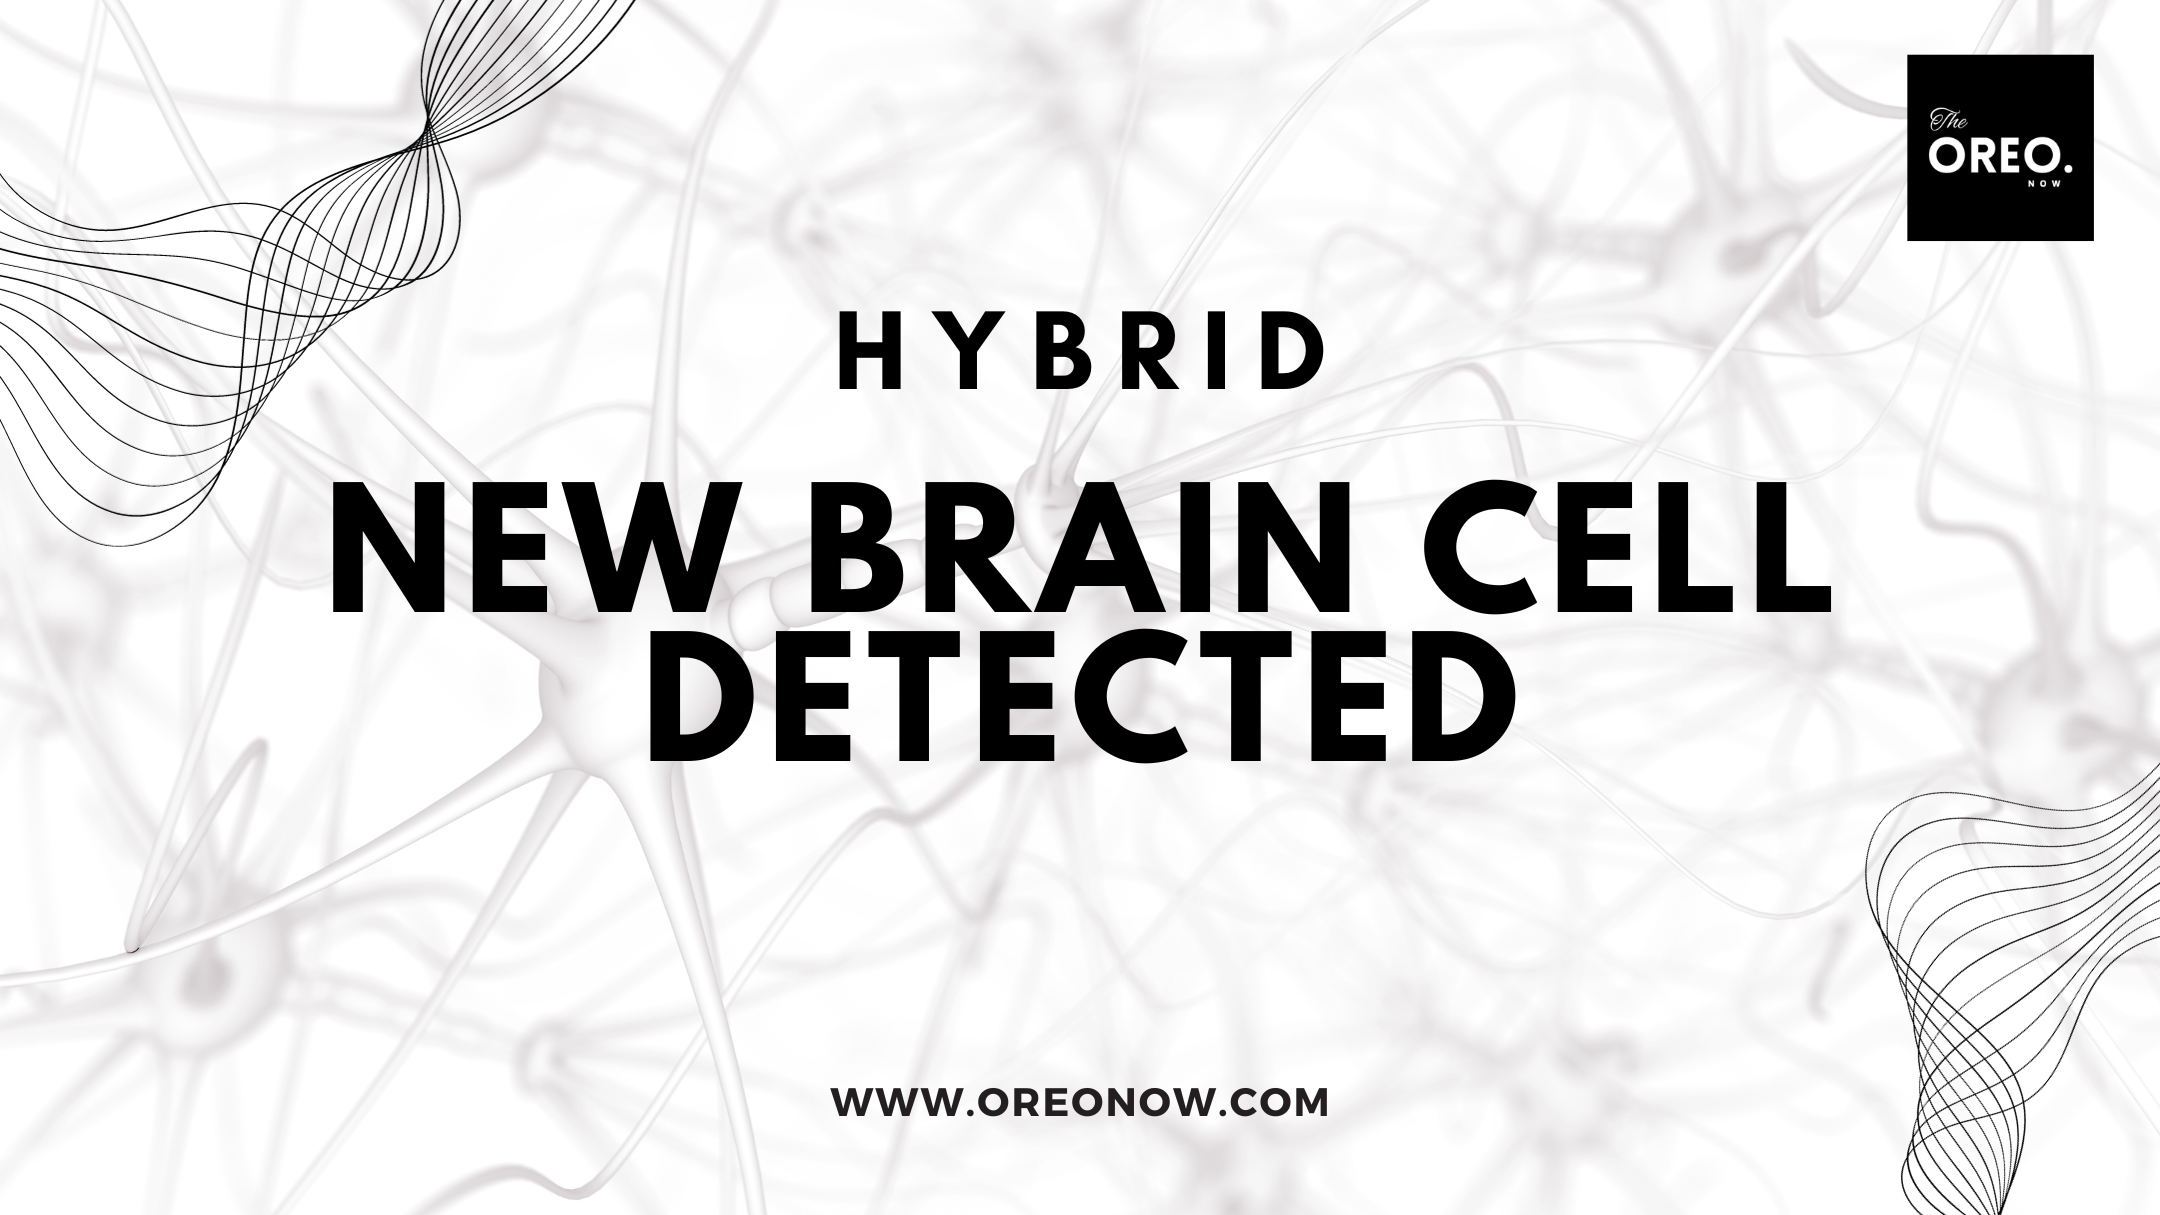 hybrid brain cells function neuroscience brain discoveries latest news